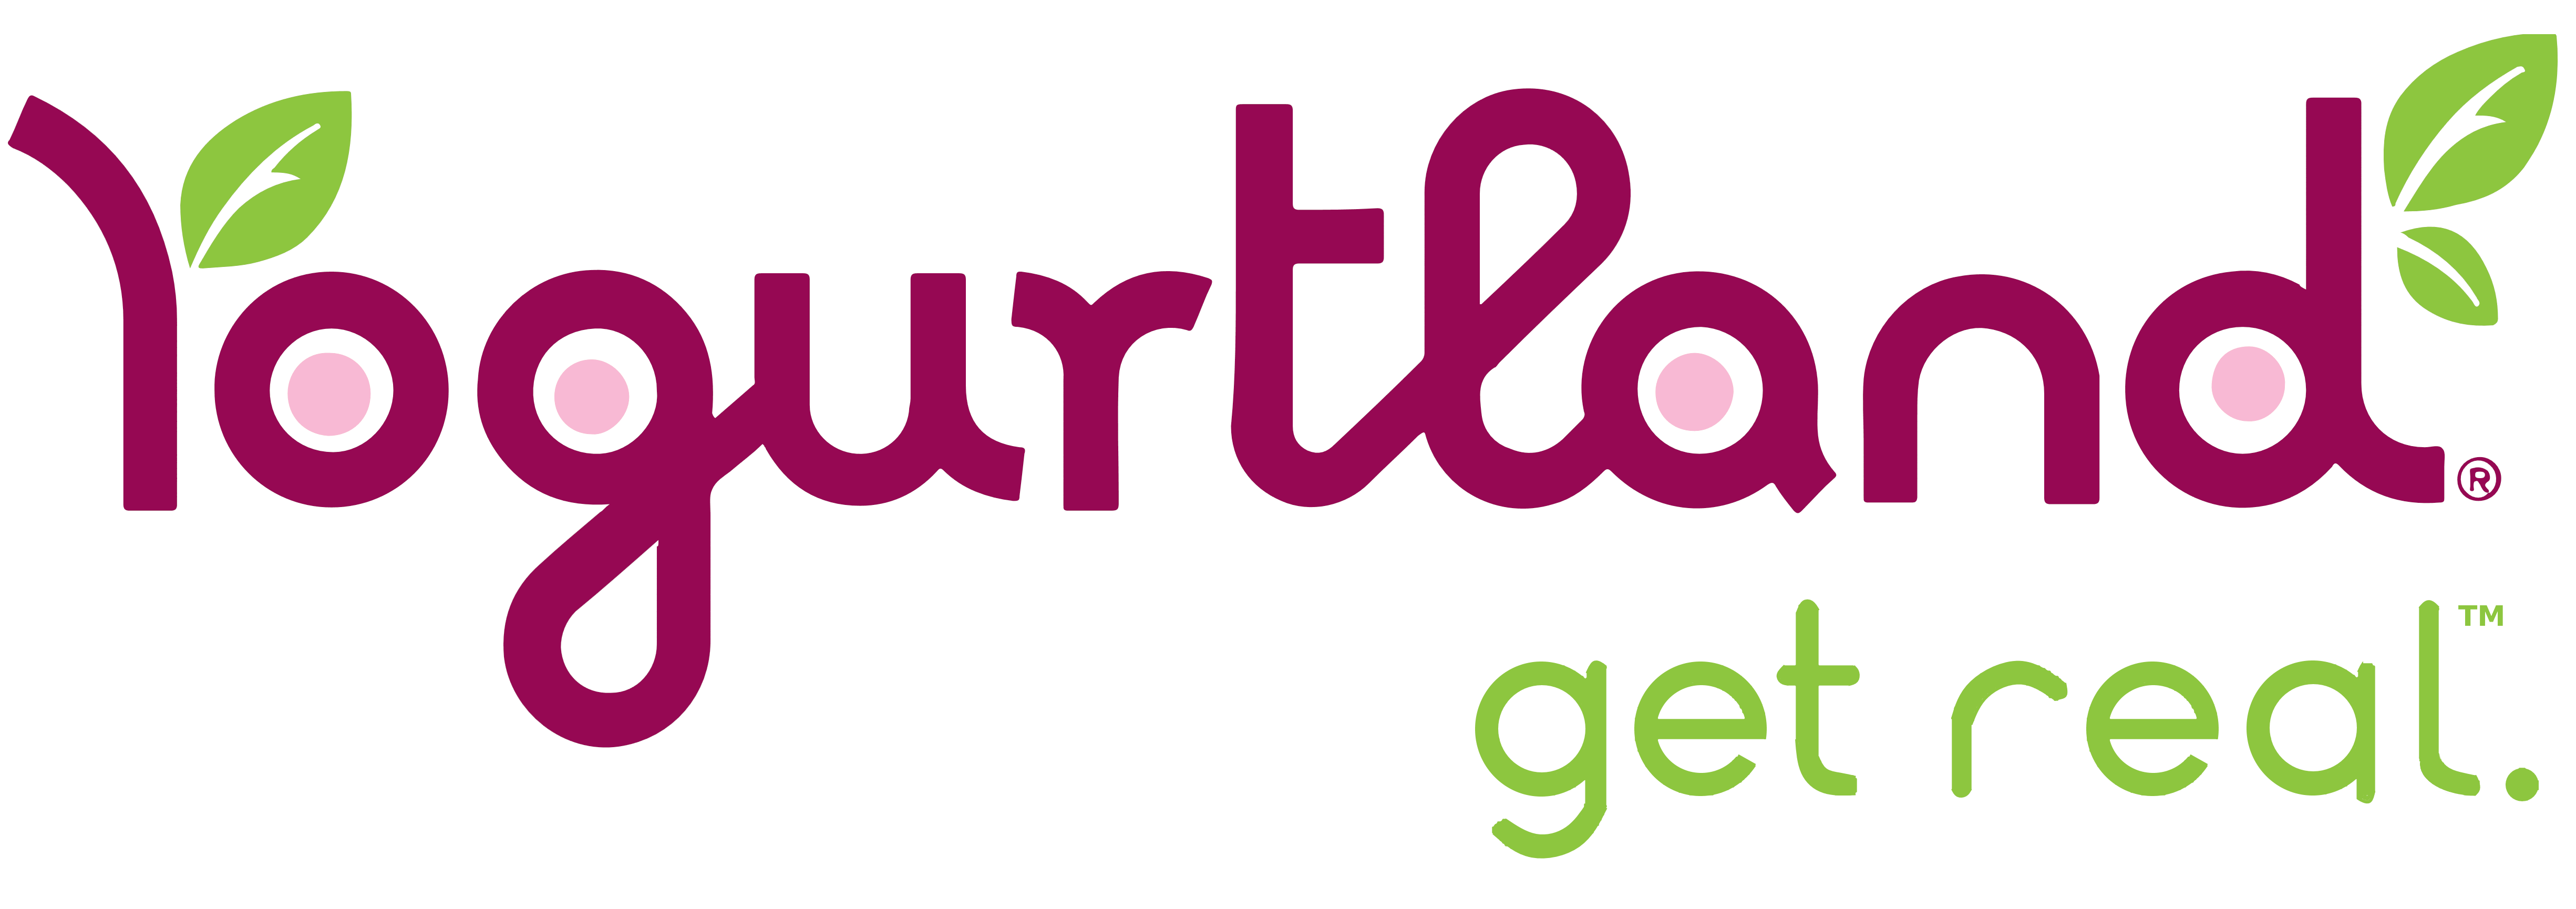 Yogurtland logo, logotype